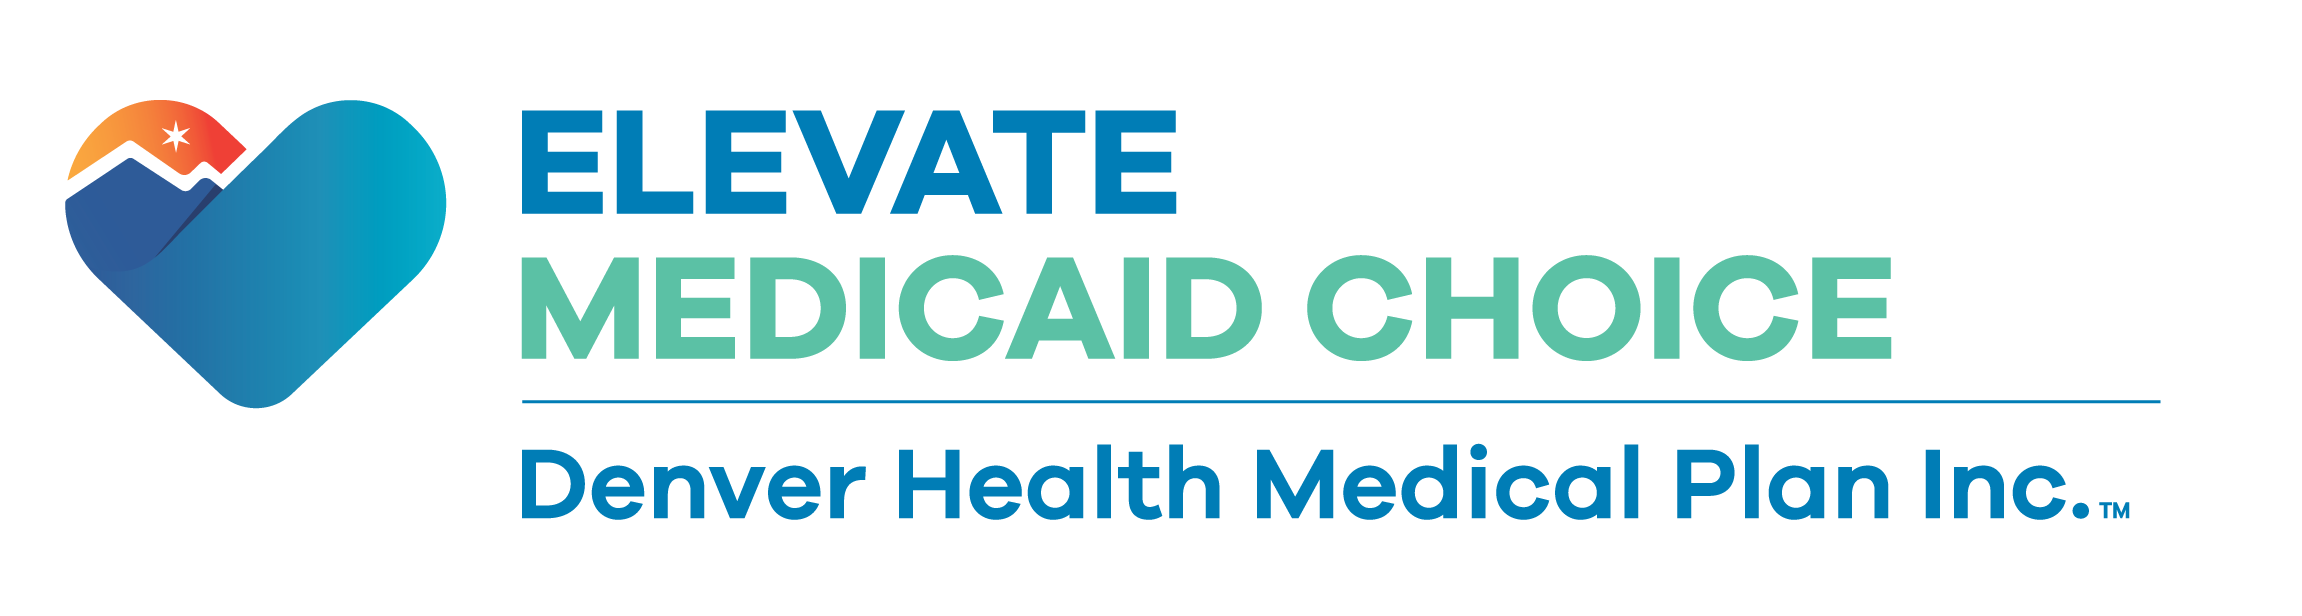 Denver Health Medical Plan, Inc. CHP Logo